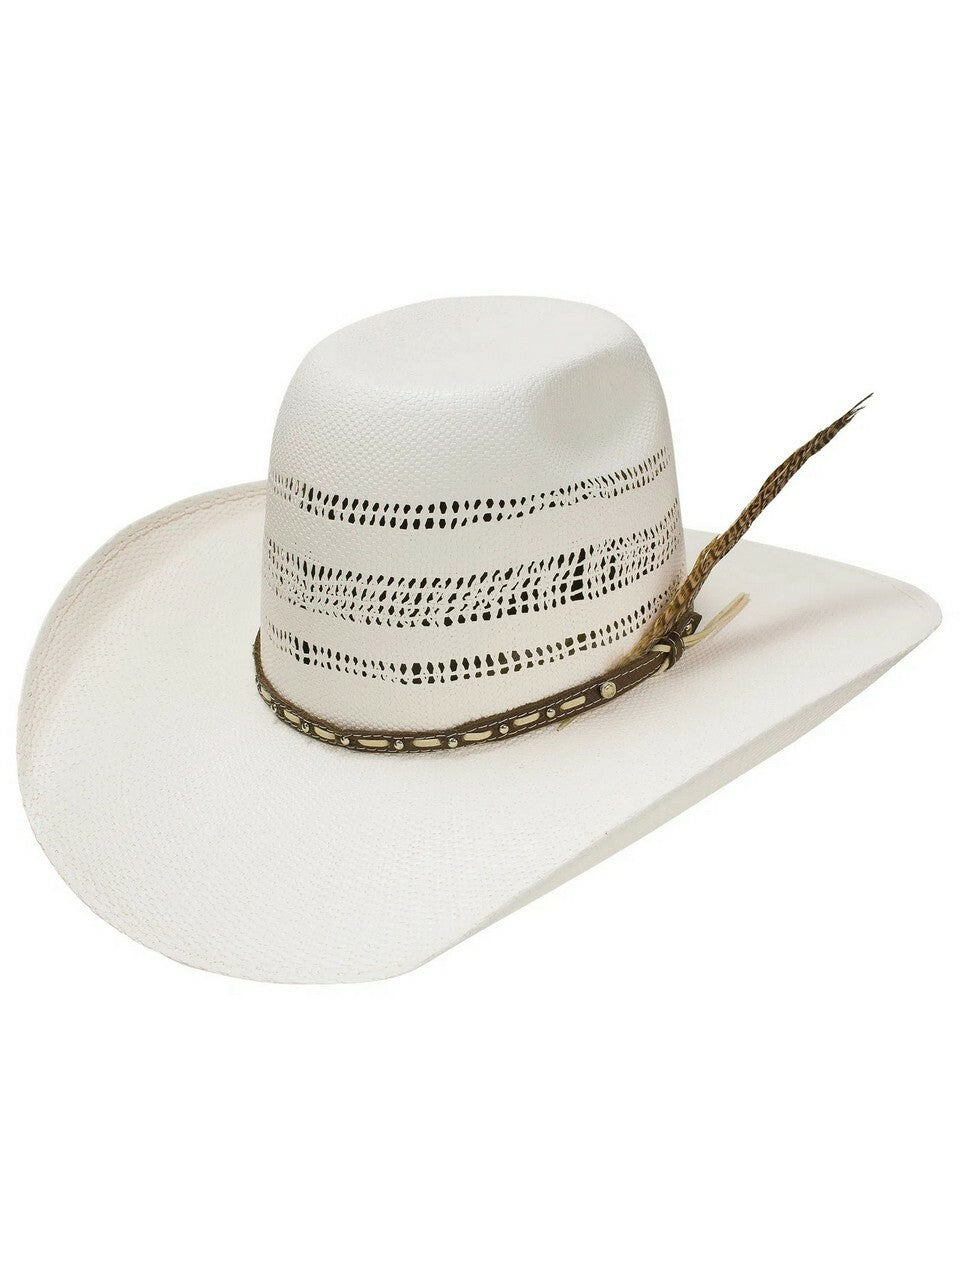 Resistol Wilshire Straw Hat